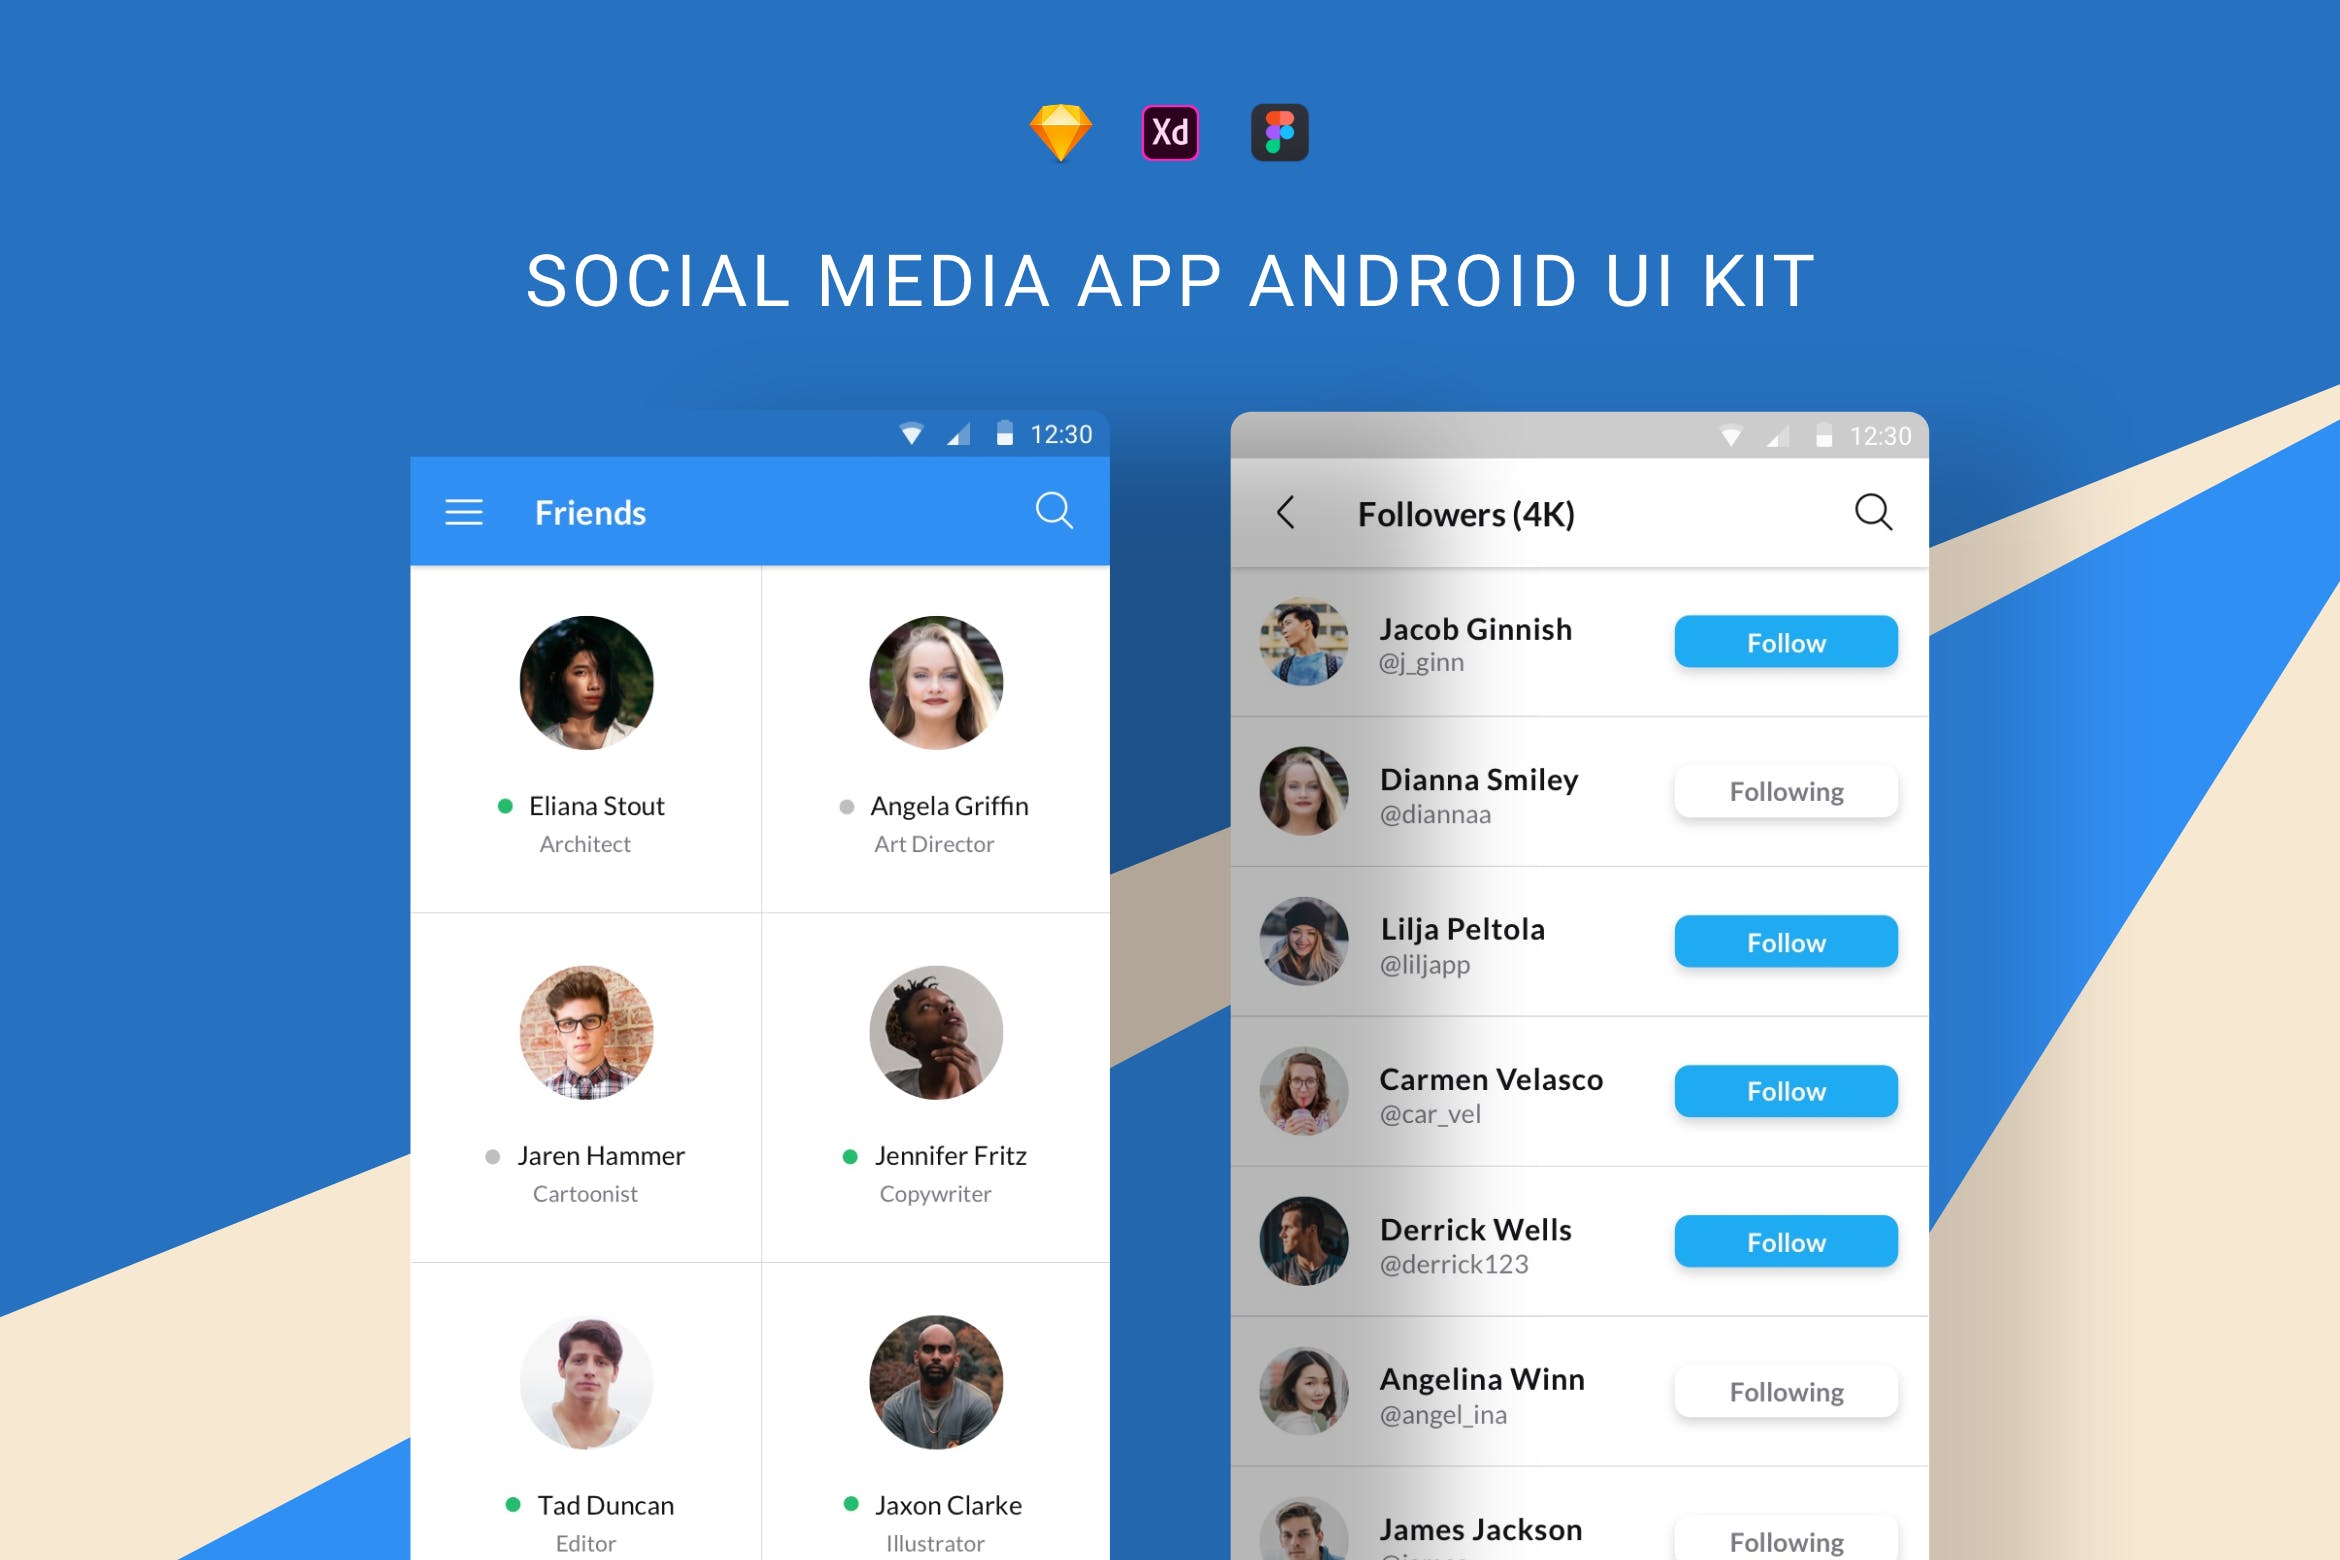 安卓社交APP应用好友管理界面设计模板 Social Media App Android UI Kit插图